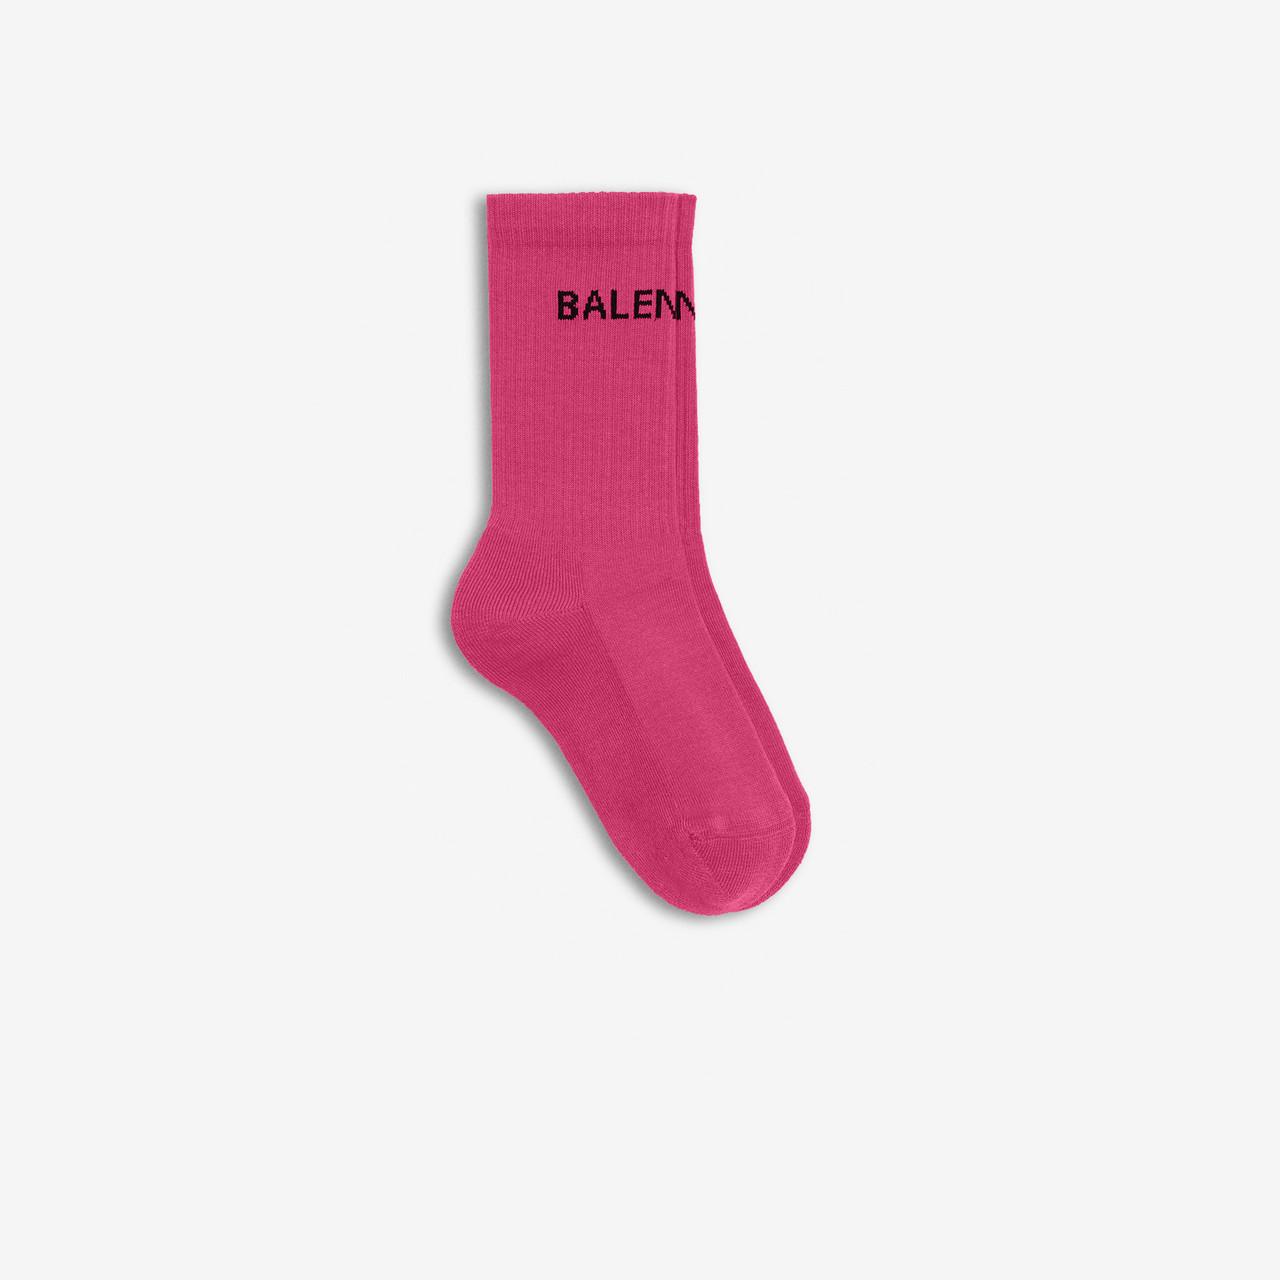 Balenciaga Cotton Socks in Pink / Black (Pink) | Lyst